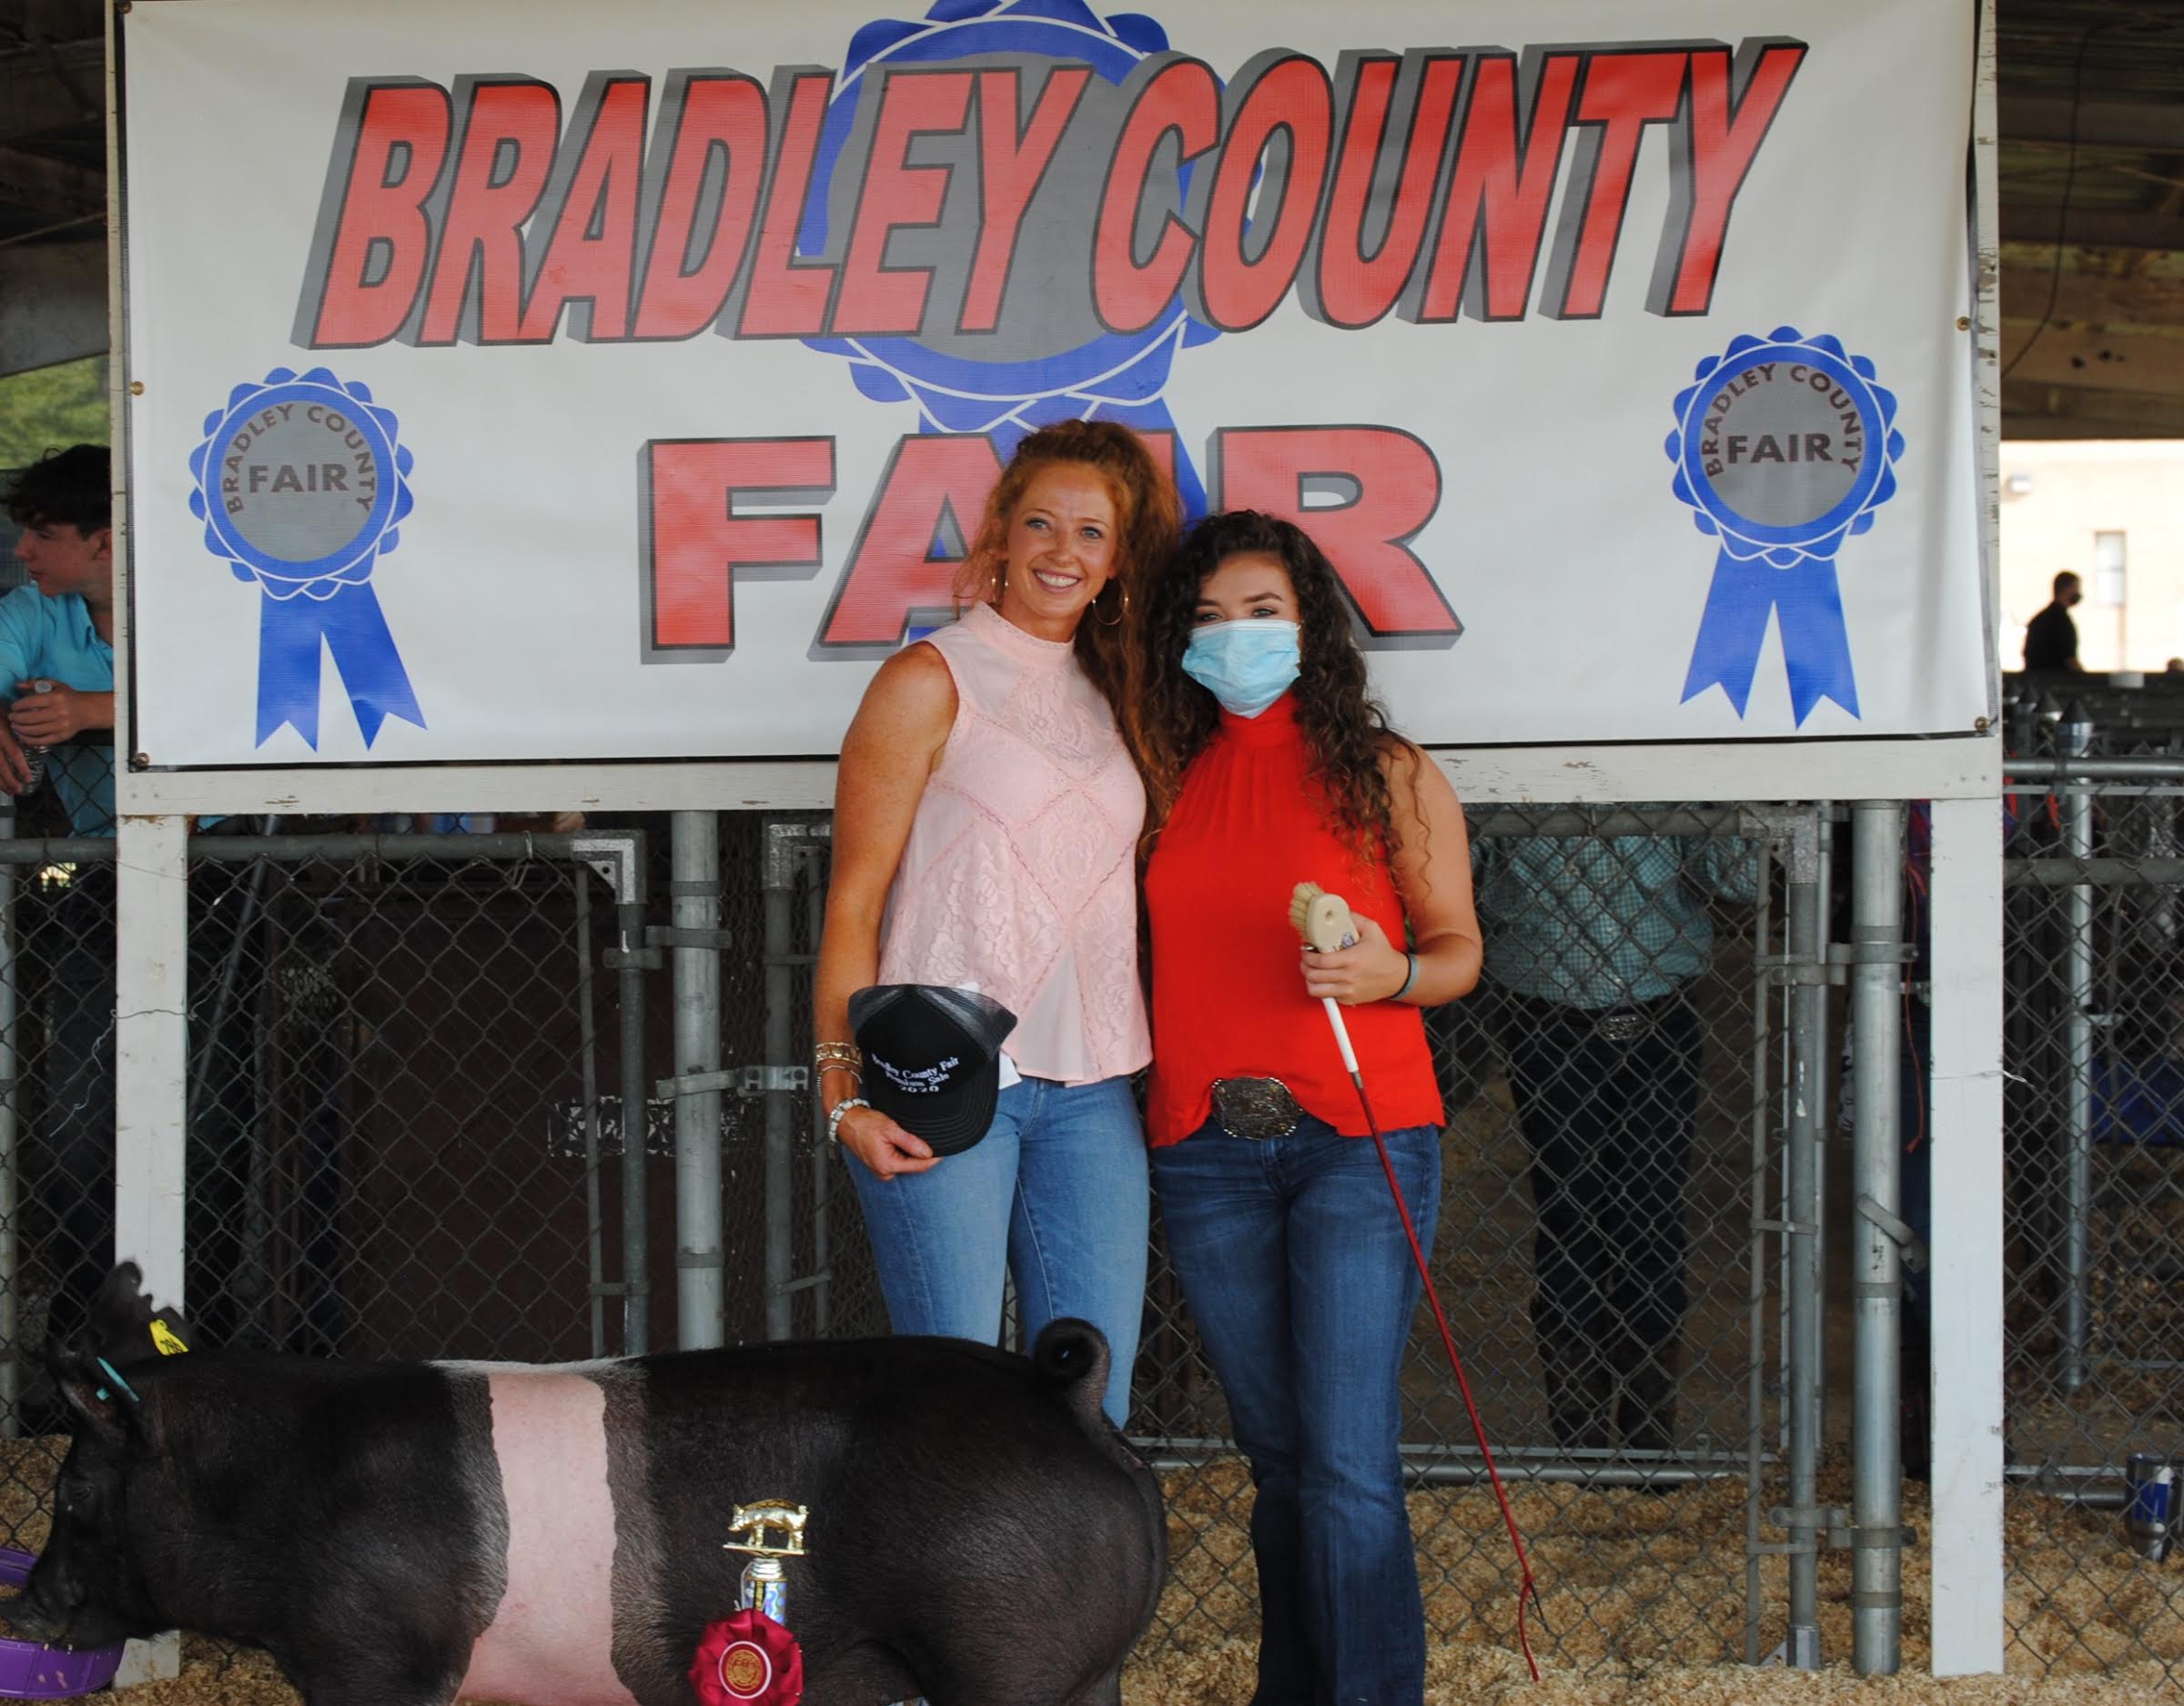 Bradley County Fair Livestock Exhibits health regulations announced